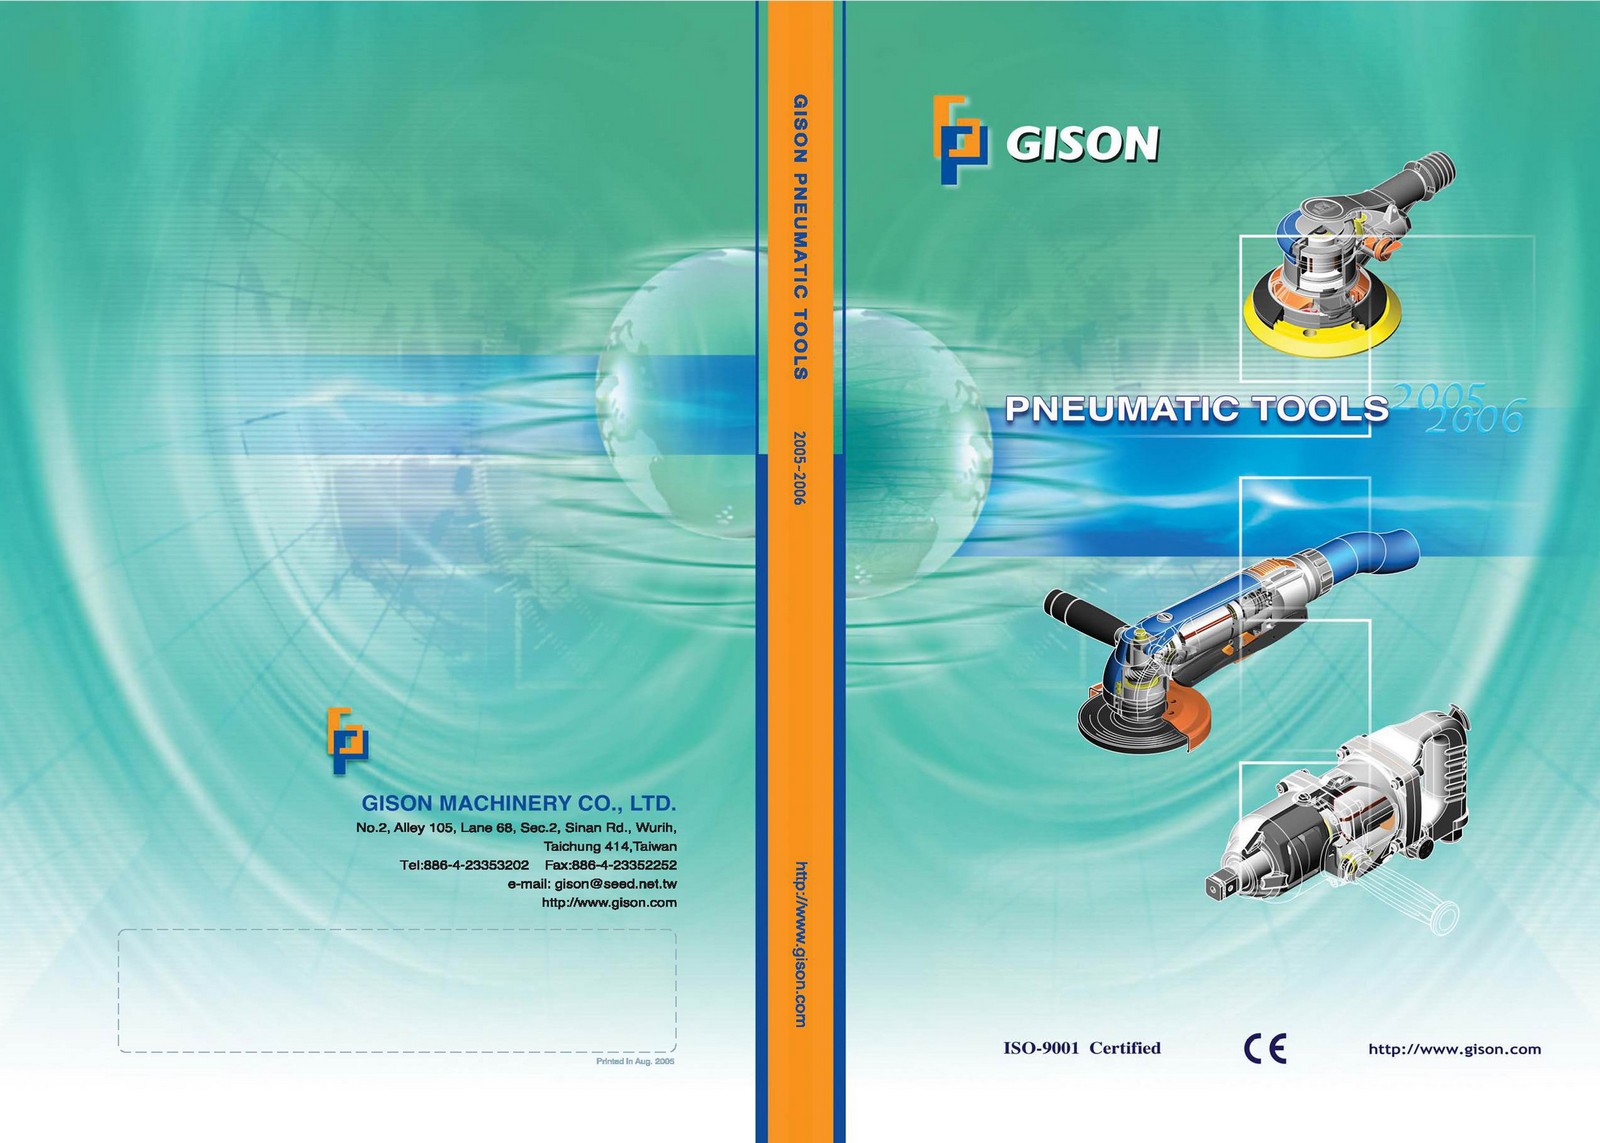 2005-2006GISONエアツール製品カタログ | 台湾吉生エアツール